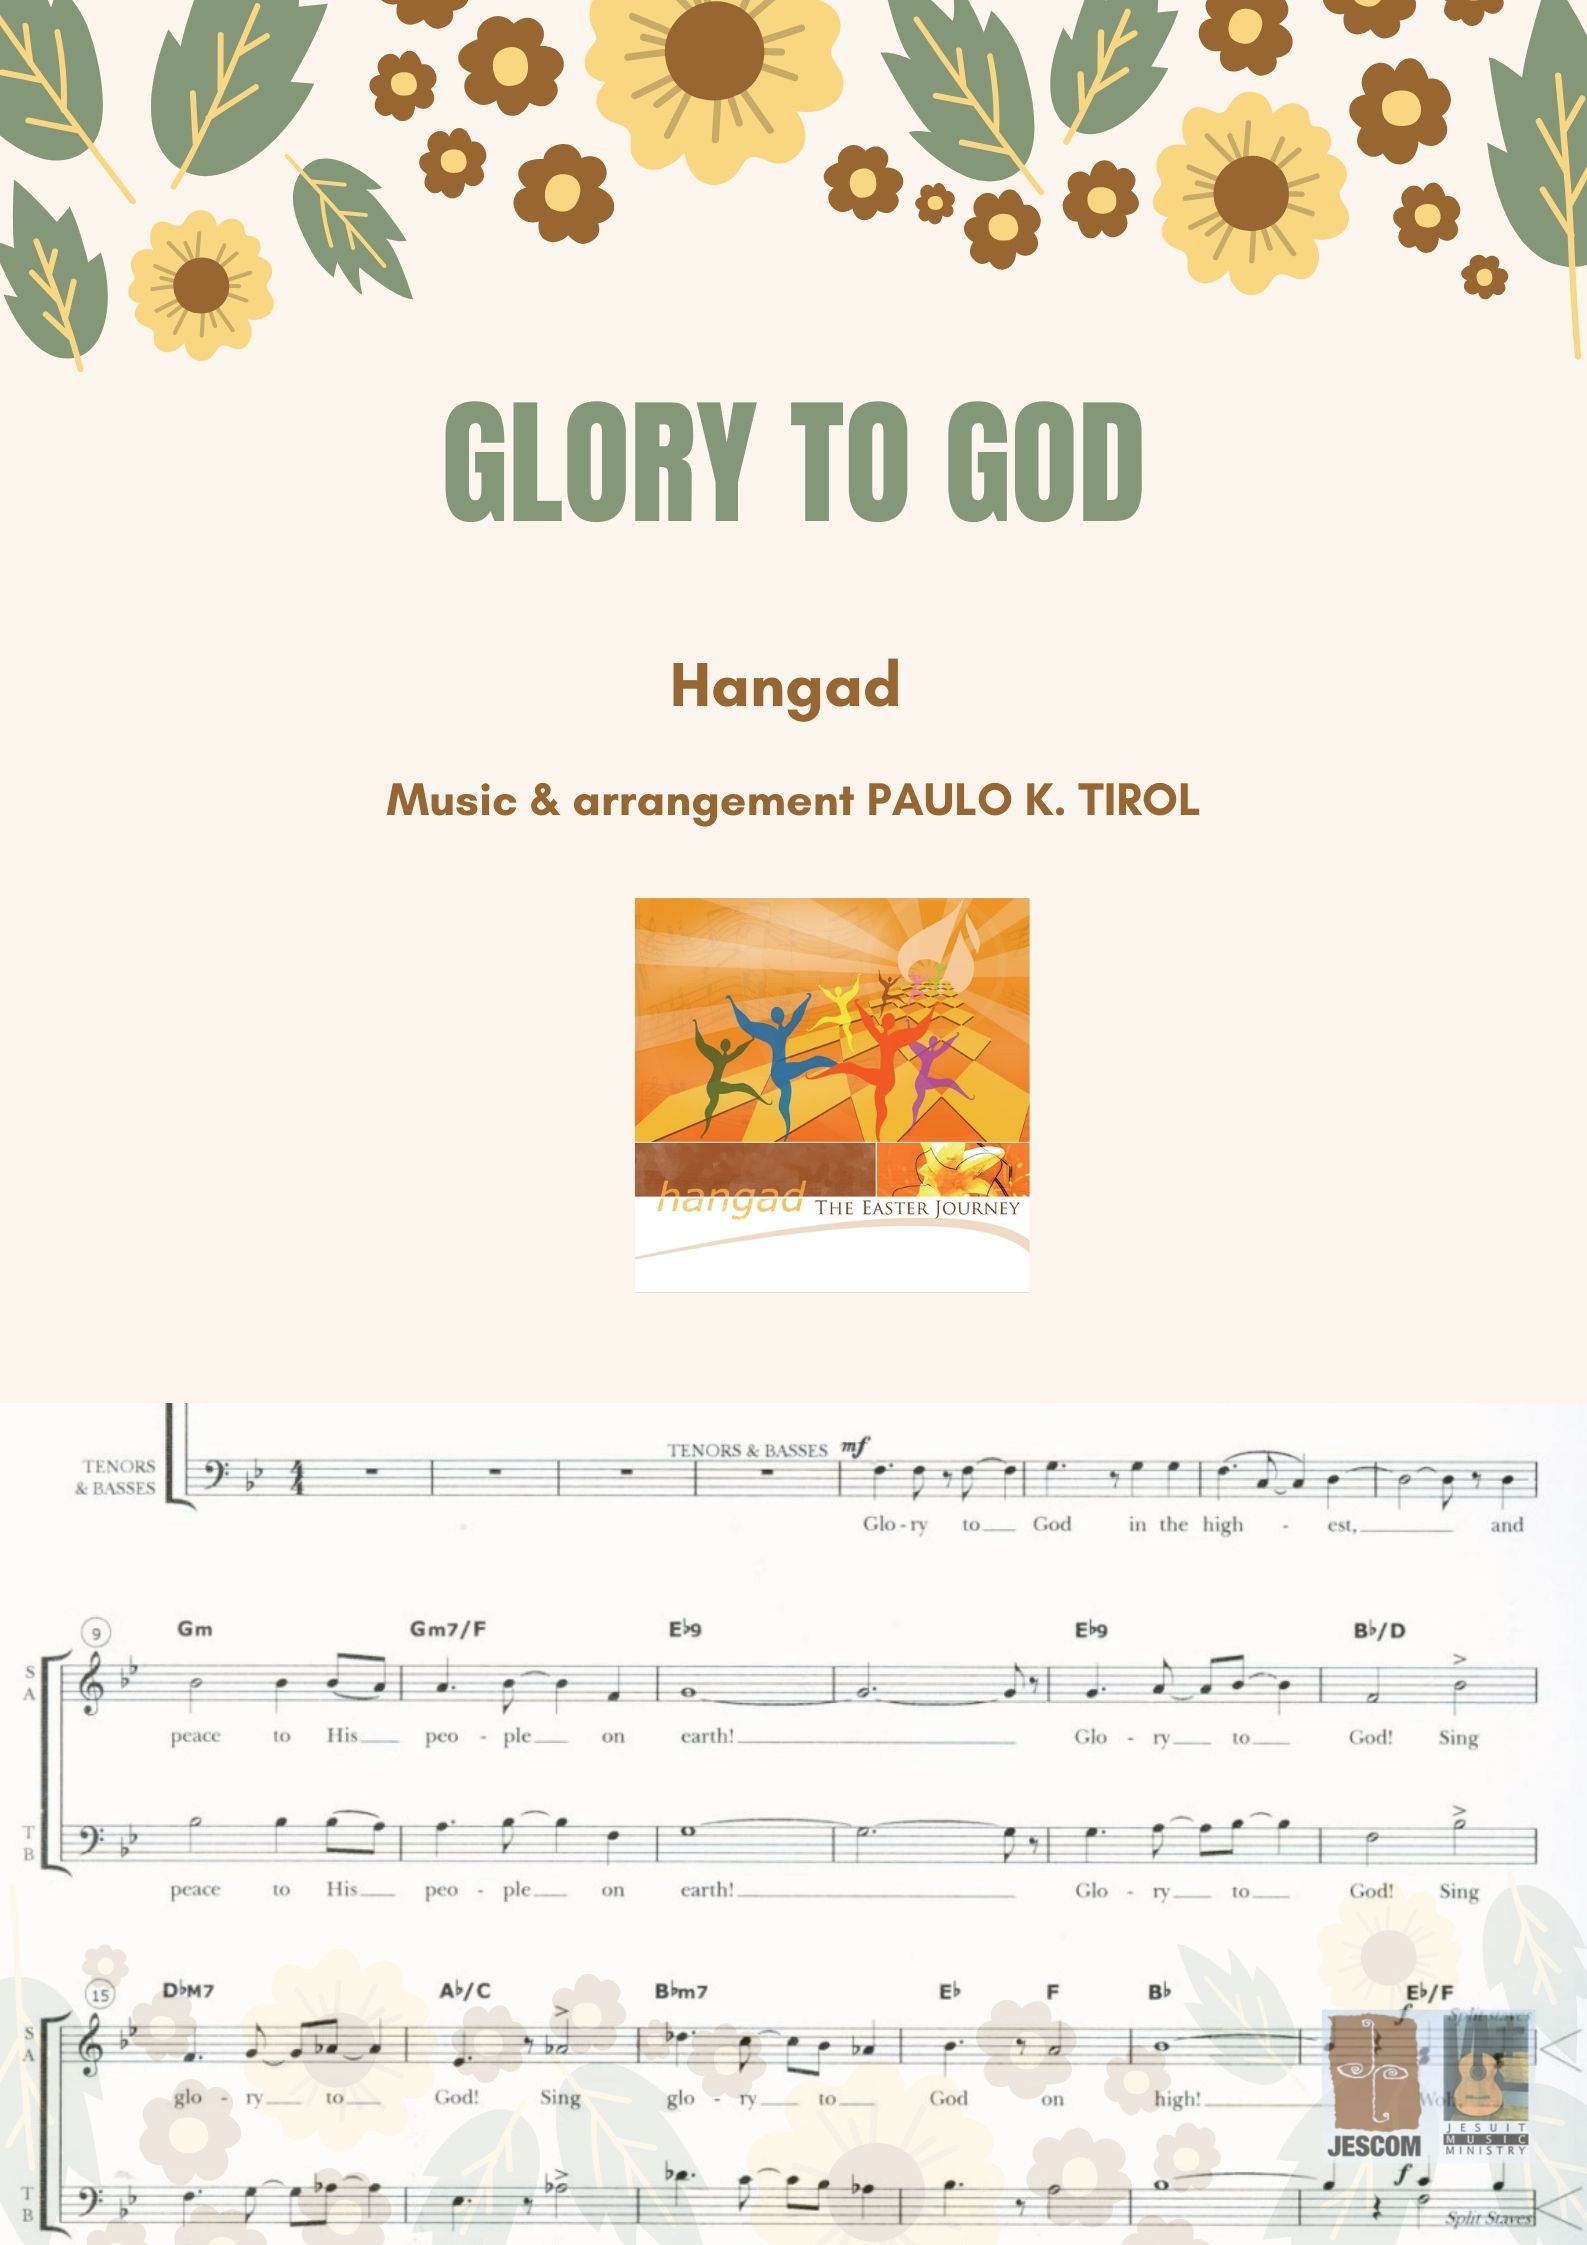 GLORY TO GOD by Tirol – Music Sheet